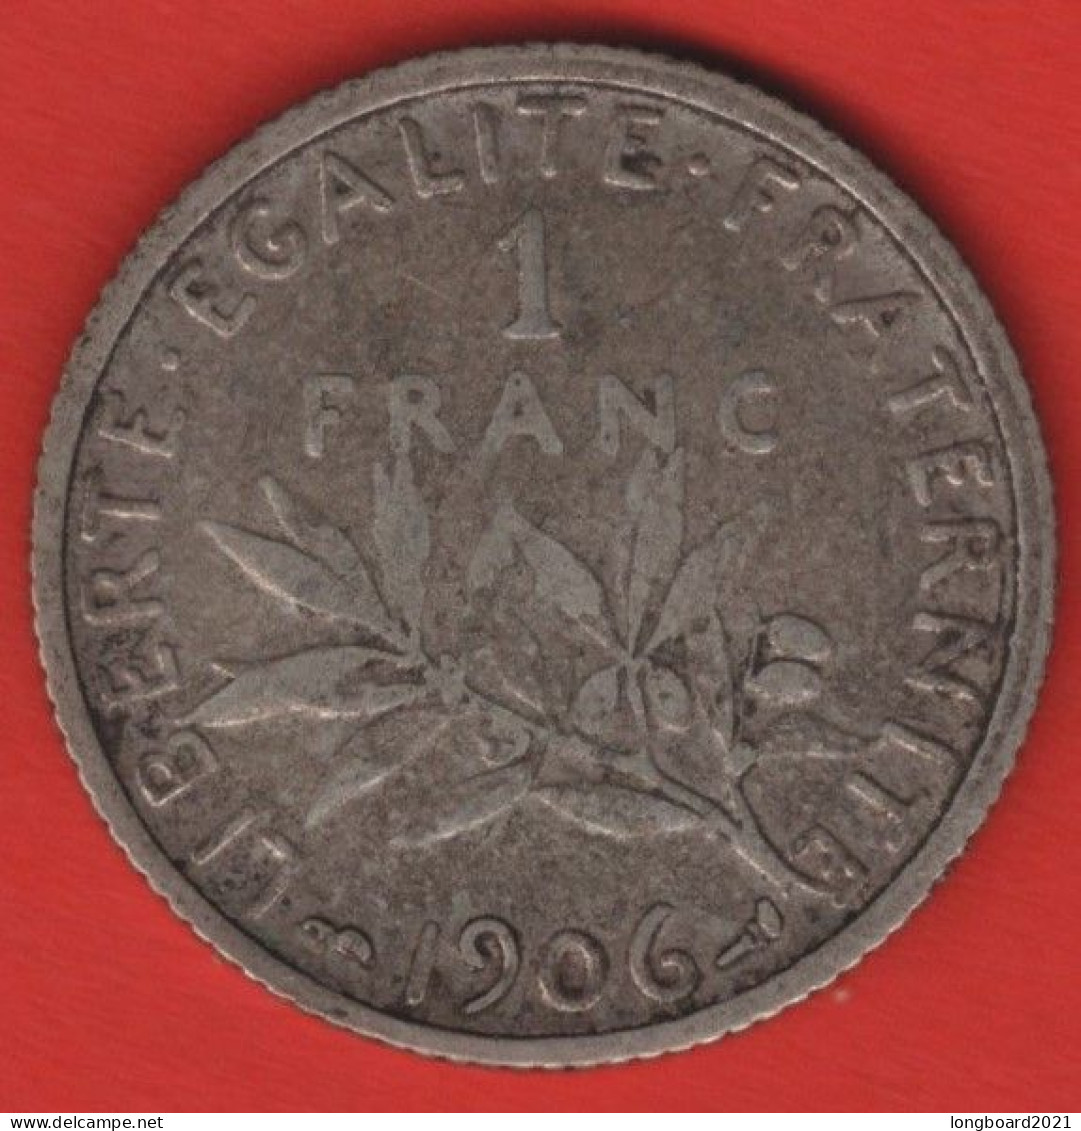 FRANCE - 1 FRANC 1906 -SILVER- - 1 Franc